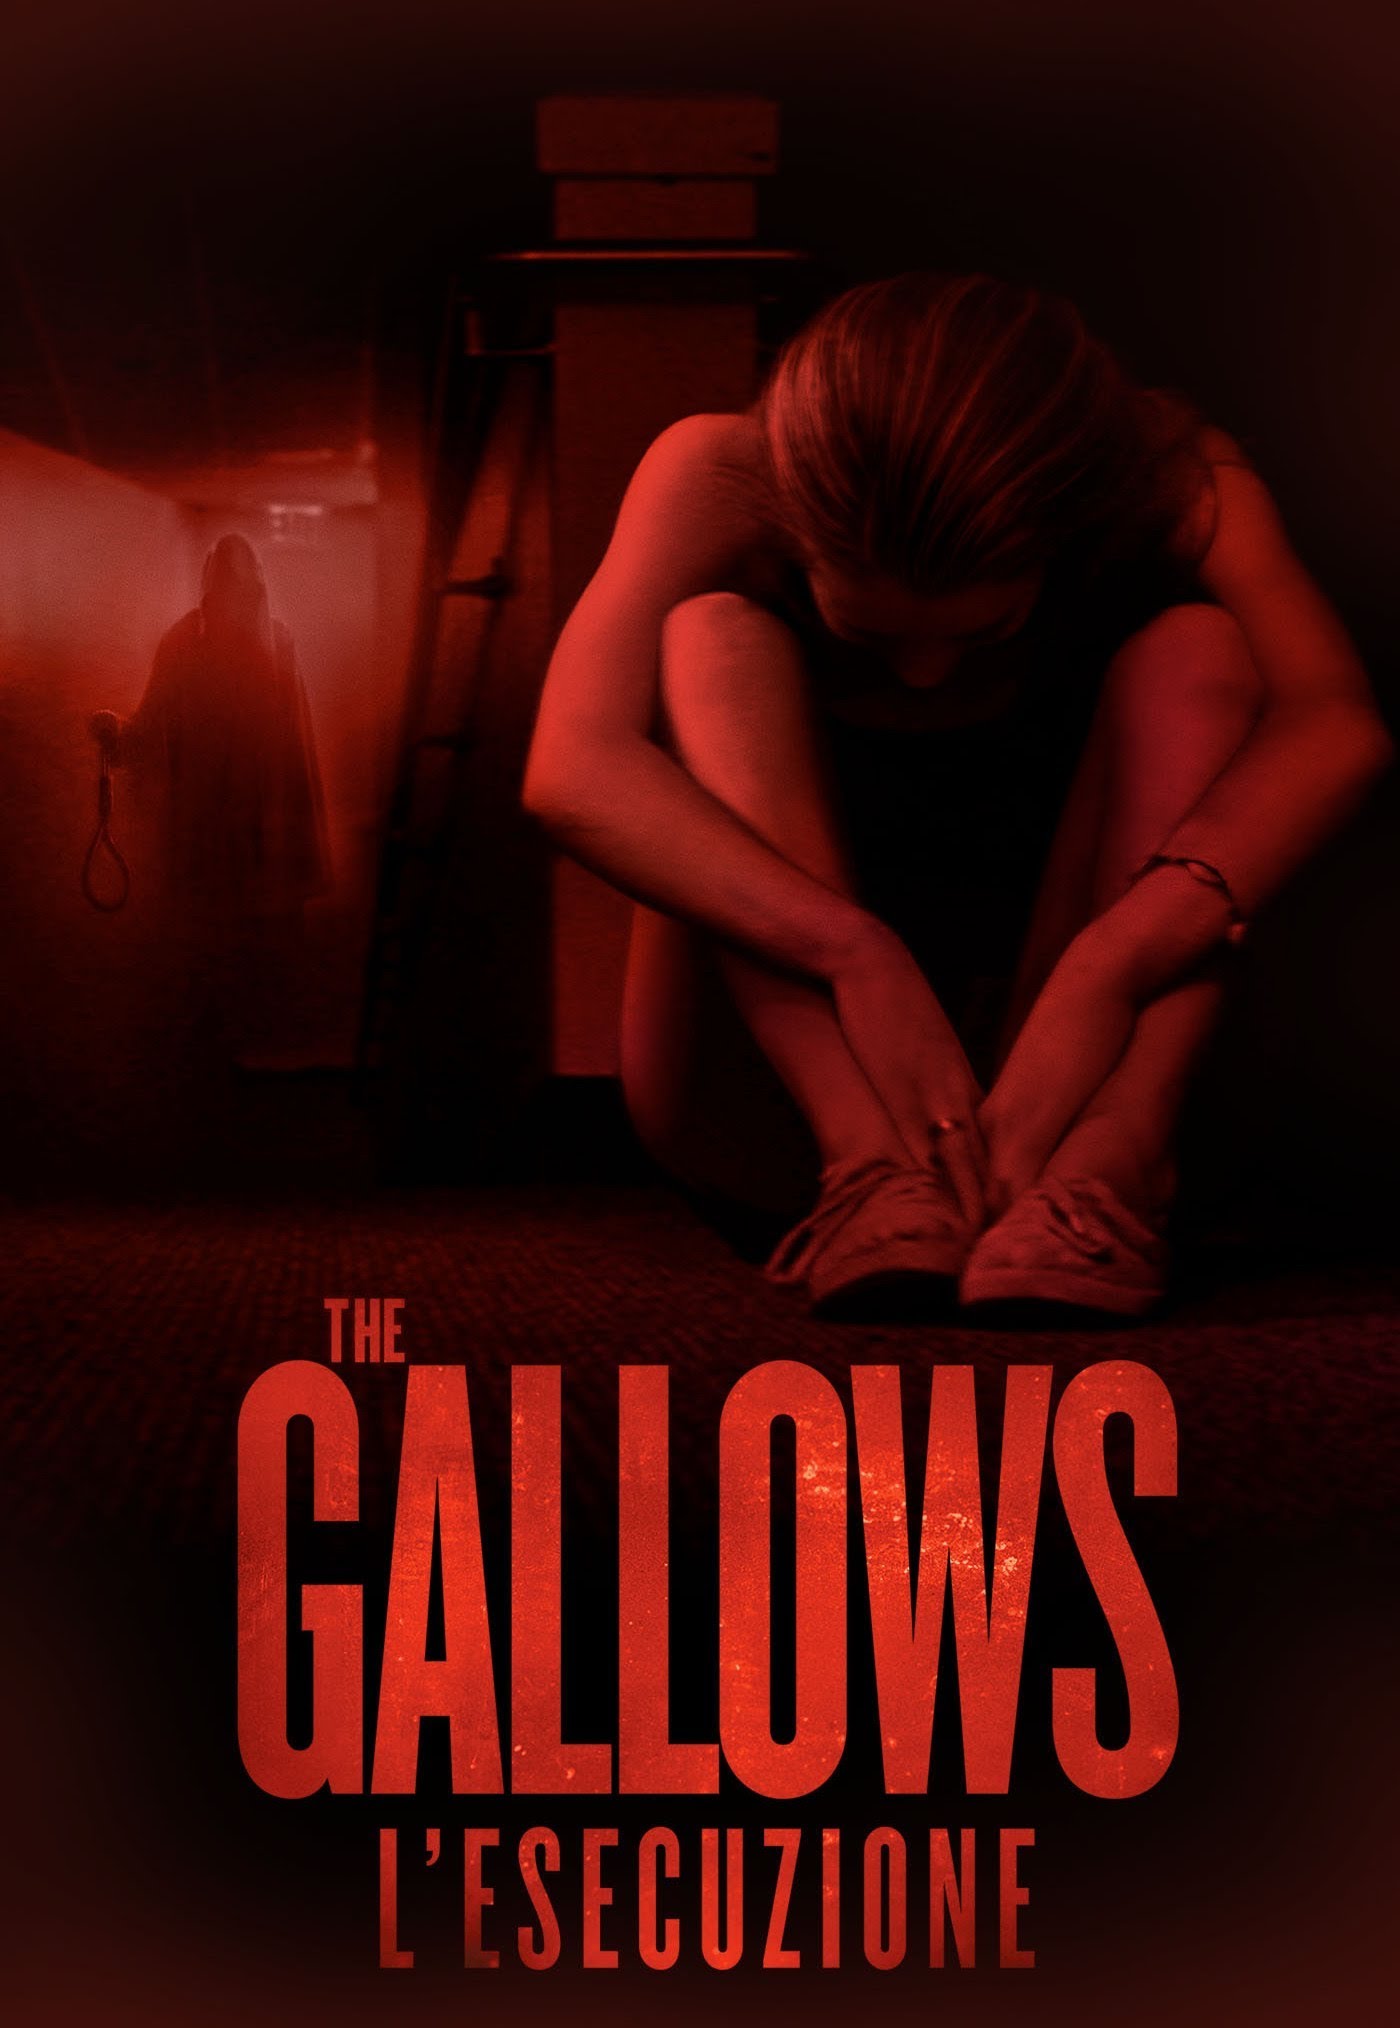 The Gallows – L’esecuzione [HD] (2015)